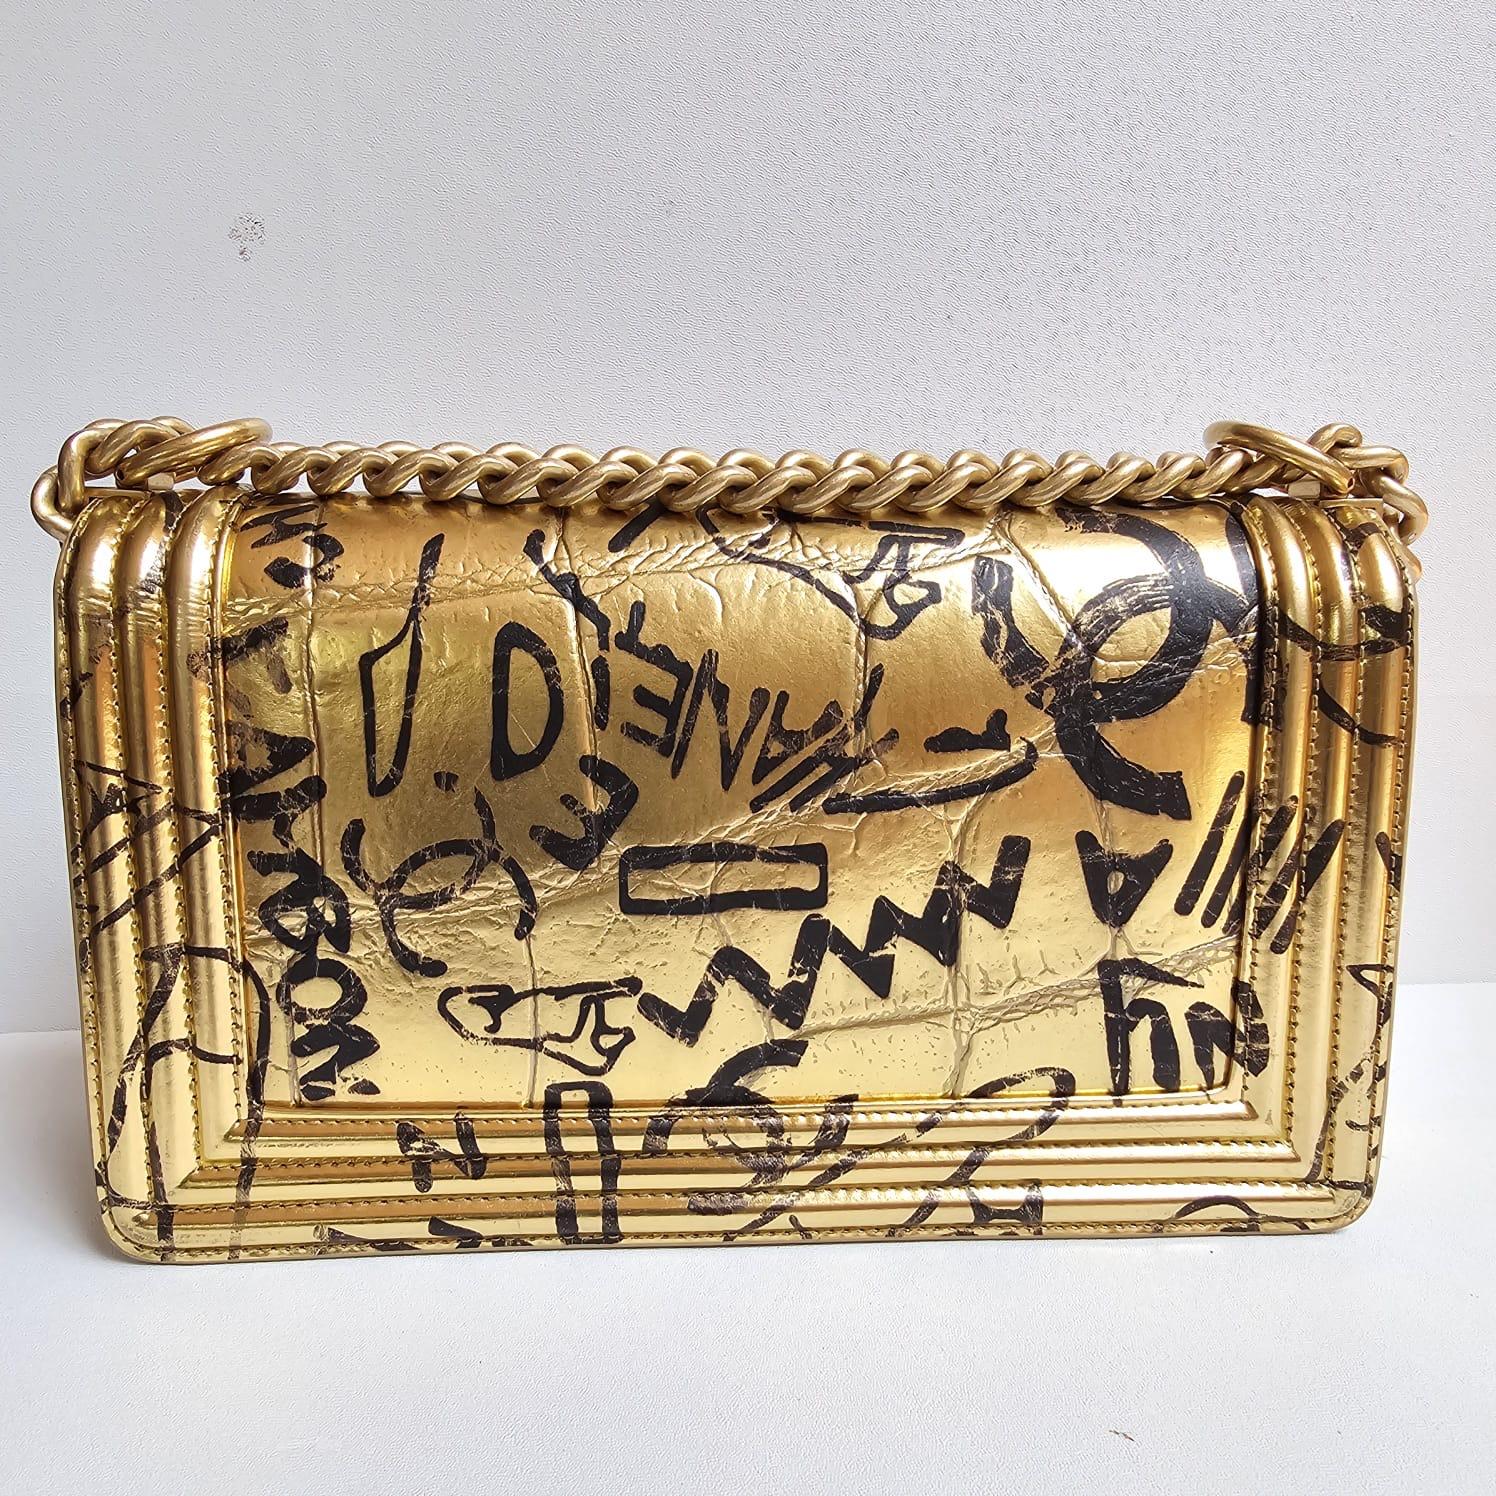 Rare Chanel Paris-New York Gold Croc-Embossed Graffiti Boy Bag For Sale 1